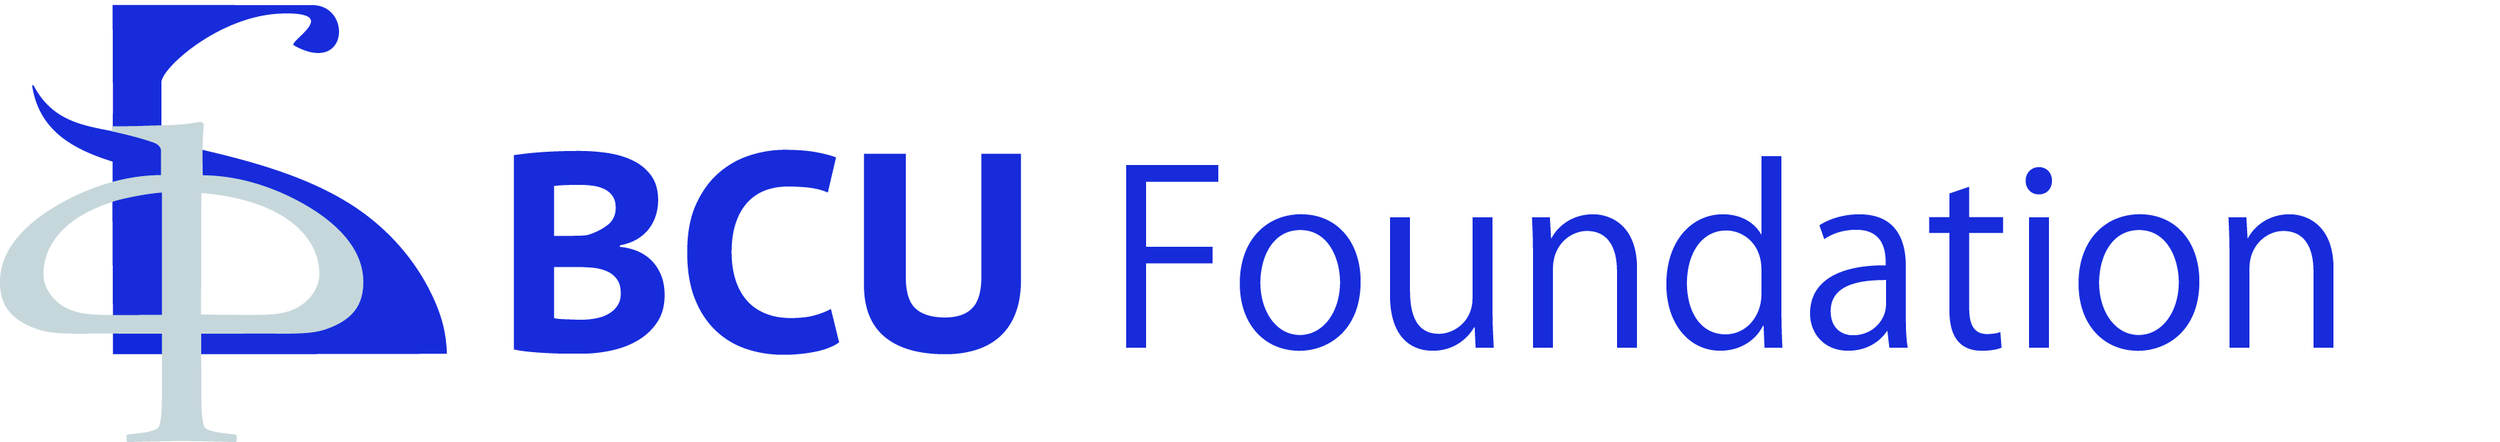 BCU Foundation logo.jpg